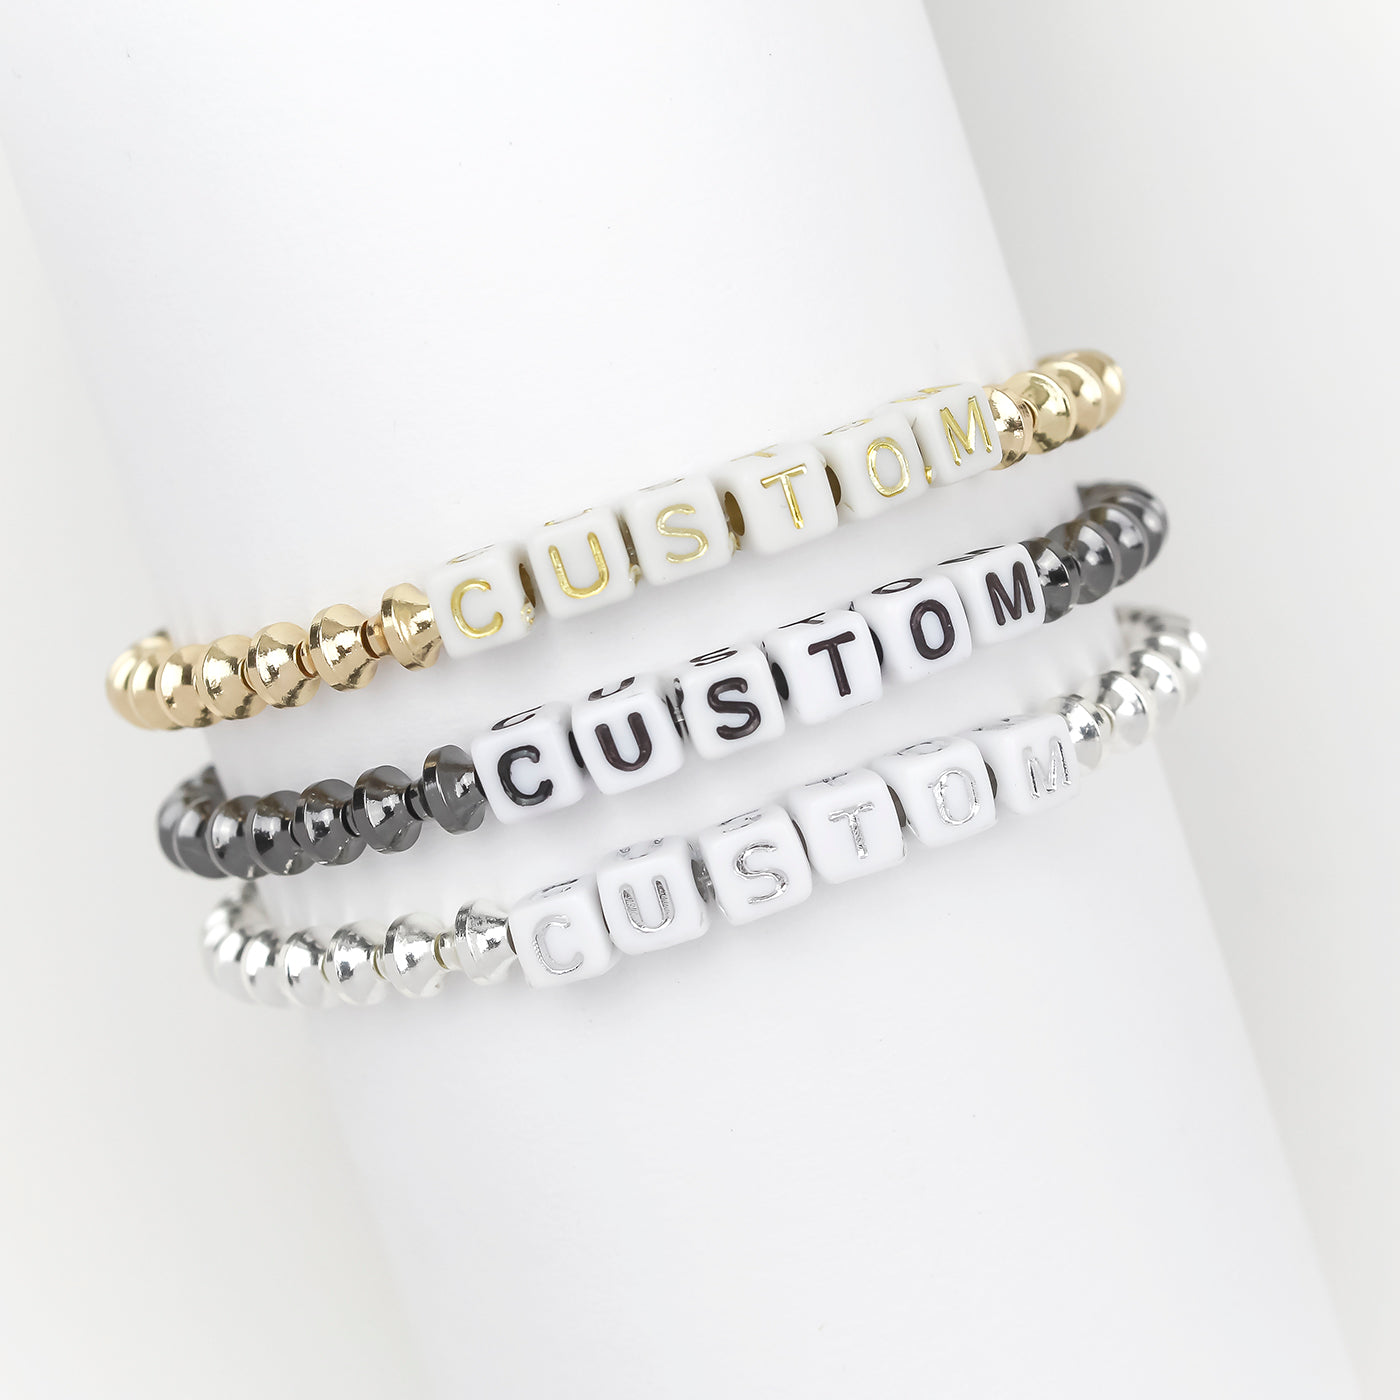 Custom Cloth Wristbands - Printed and Woven Cloth Bracelets